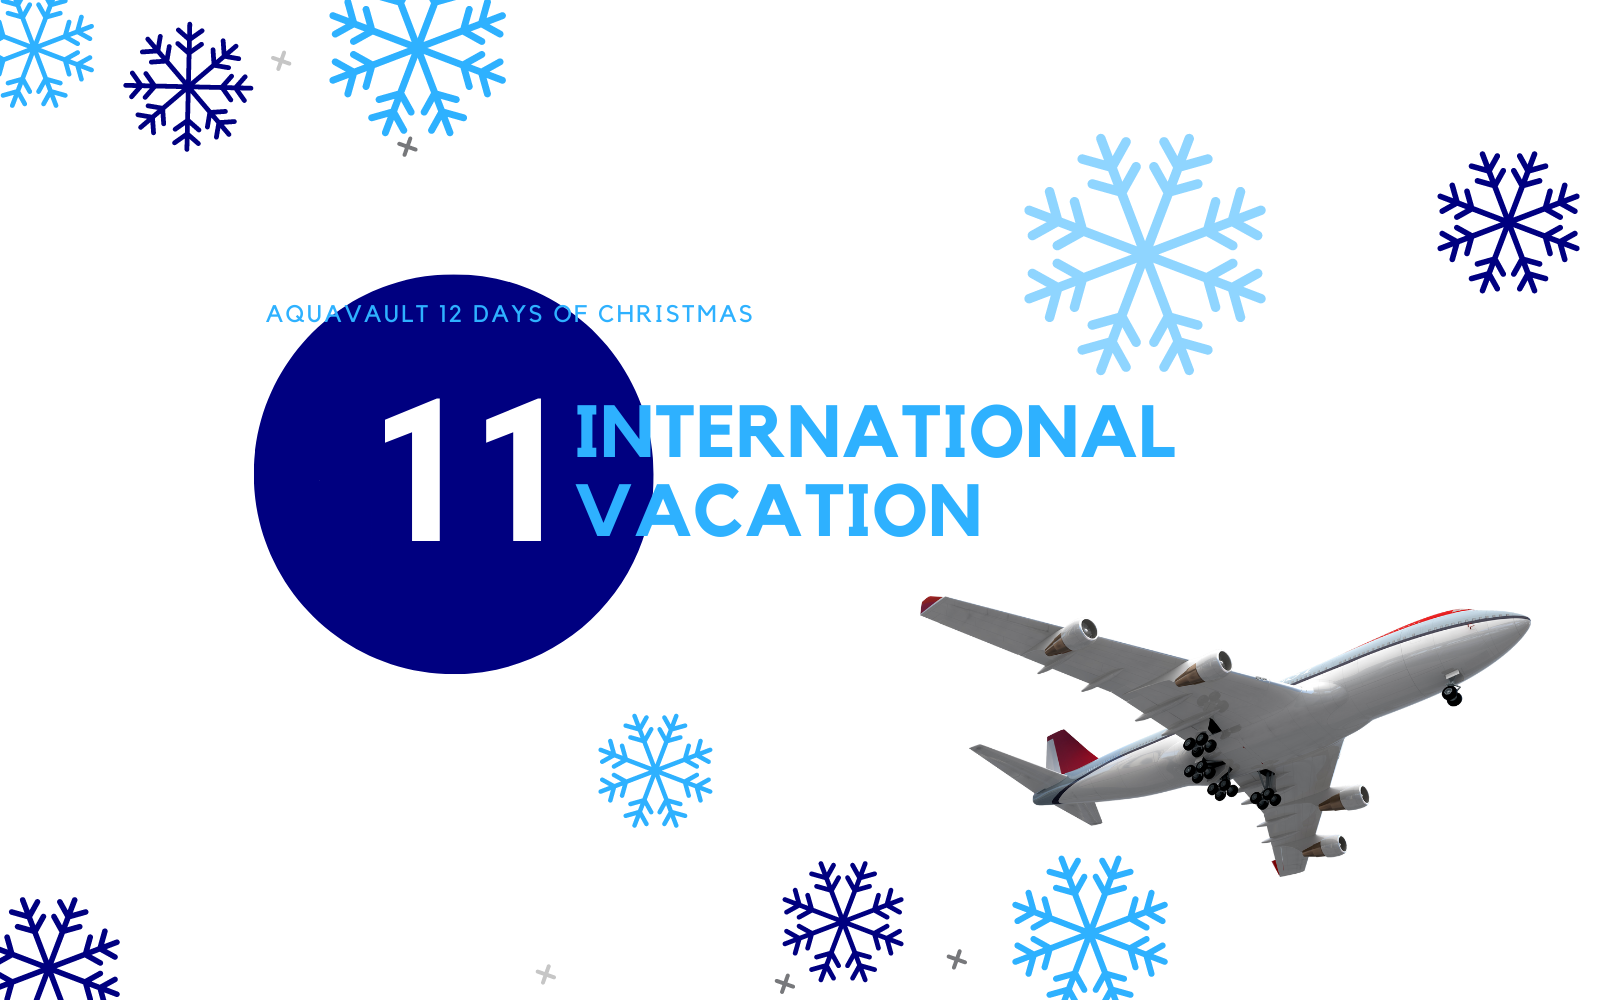 AquaVault 12 Days of Christmas - Day 11: International Vacation